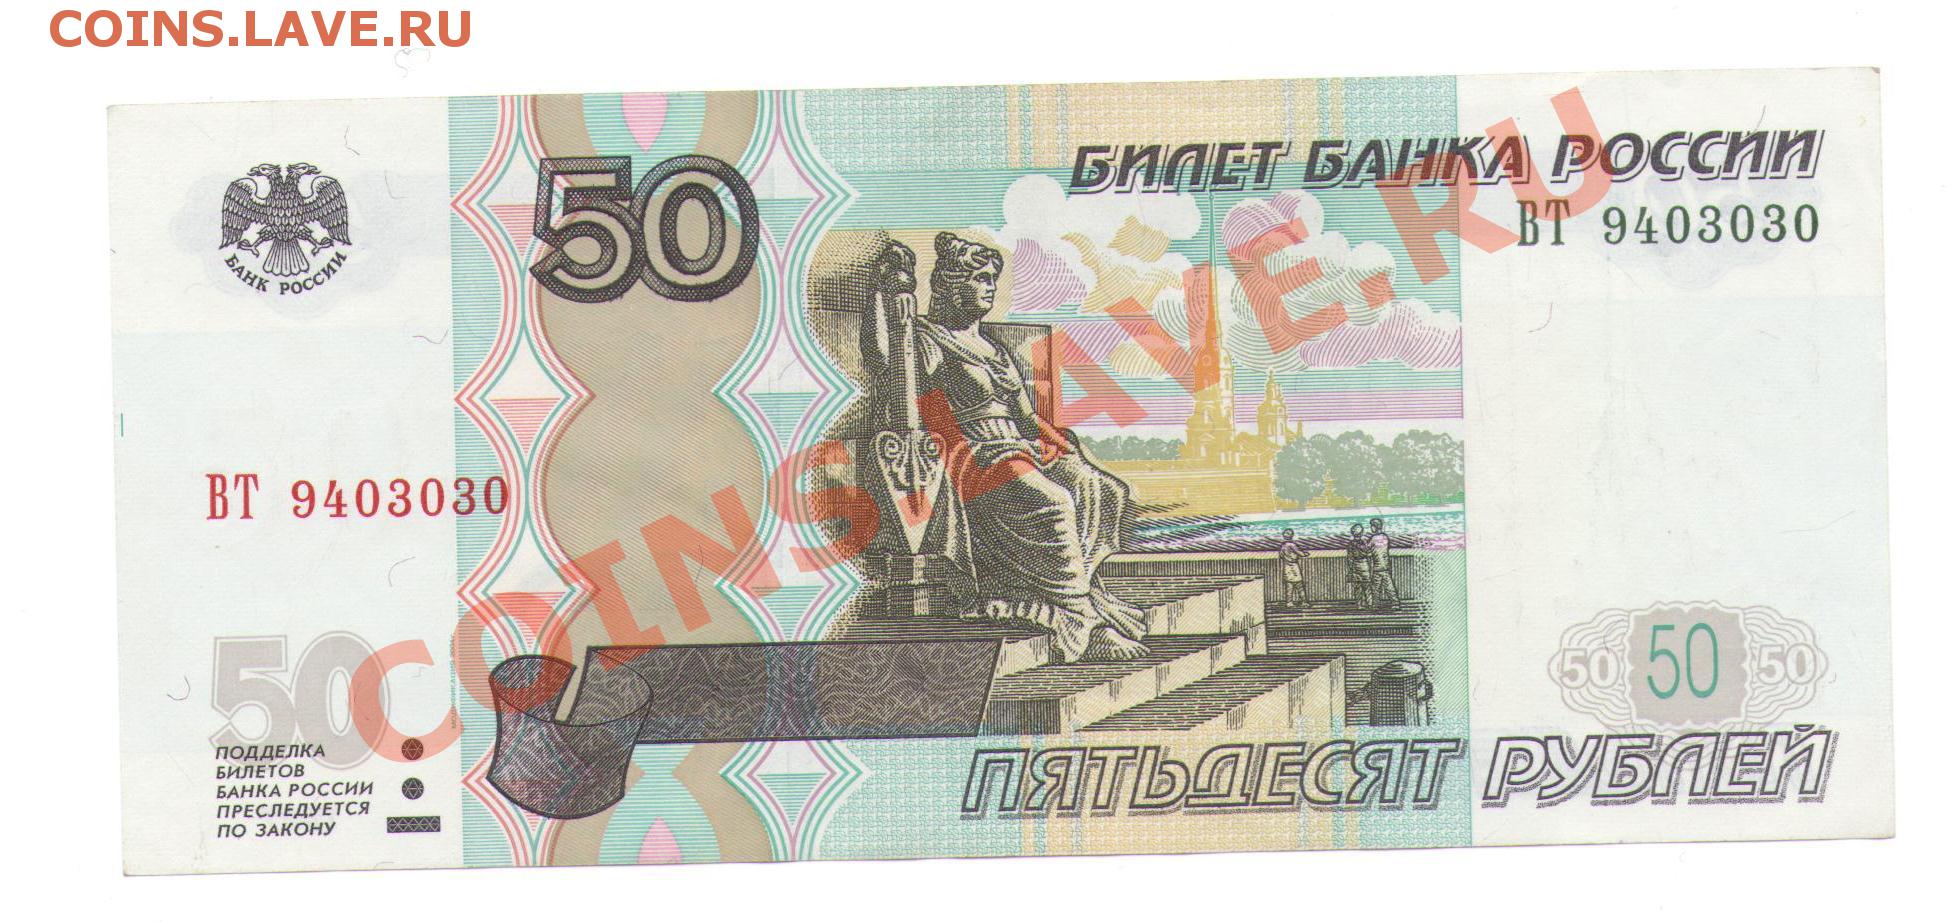 1 час 50 рублей. 50 Рублей рисунок. 50 Рублей 1997 без модификации. Купюра без цифр.